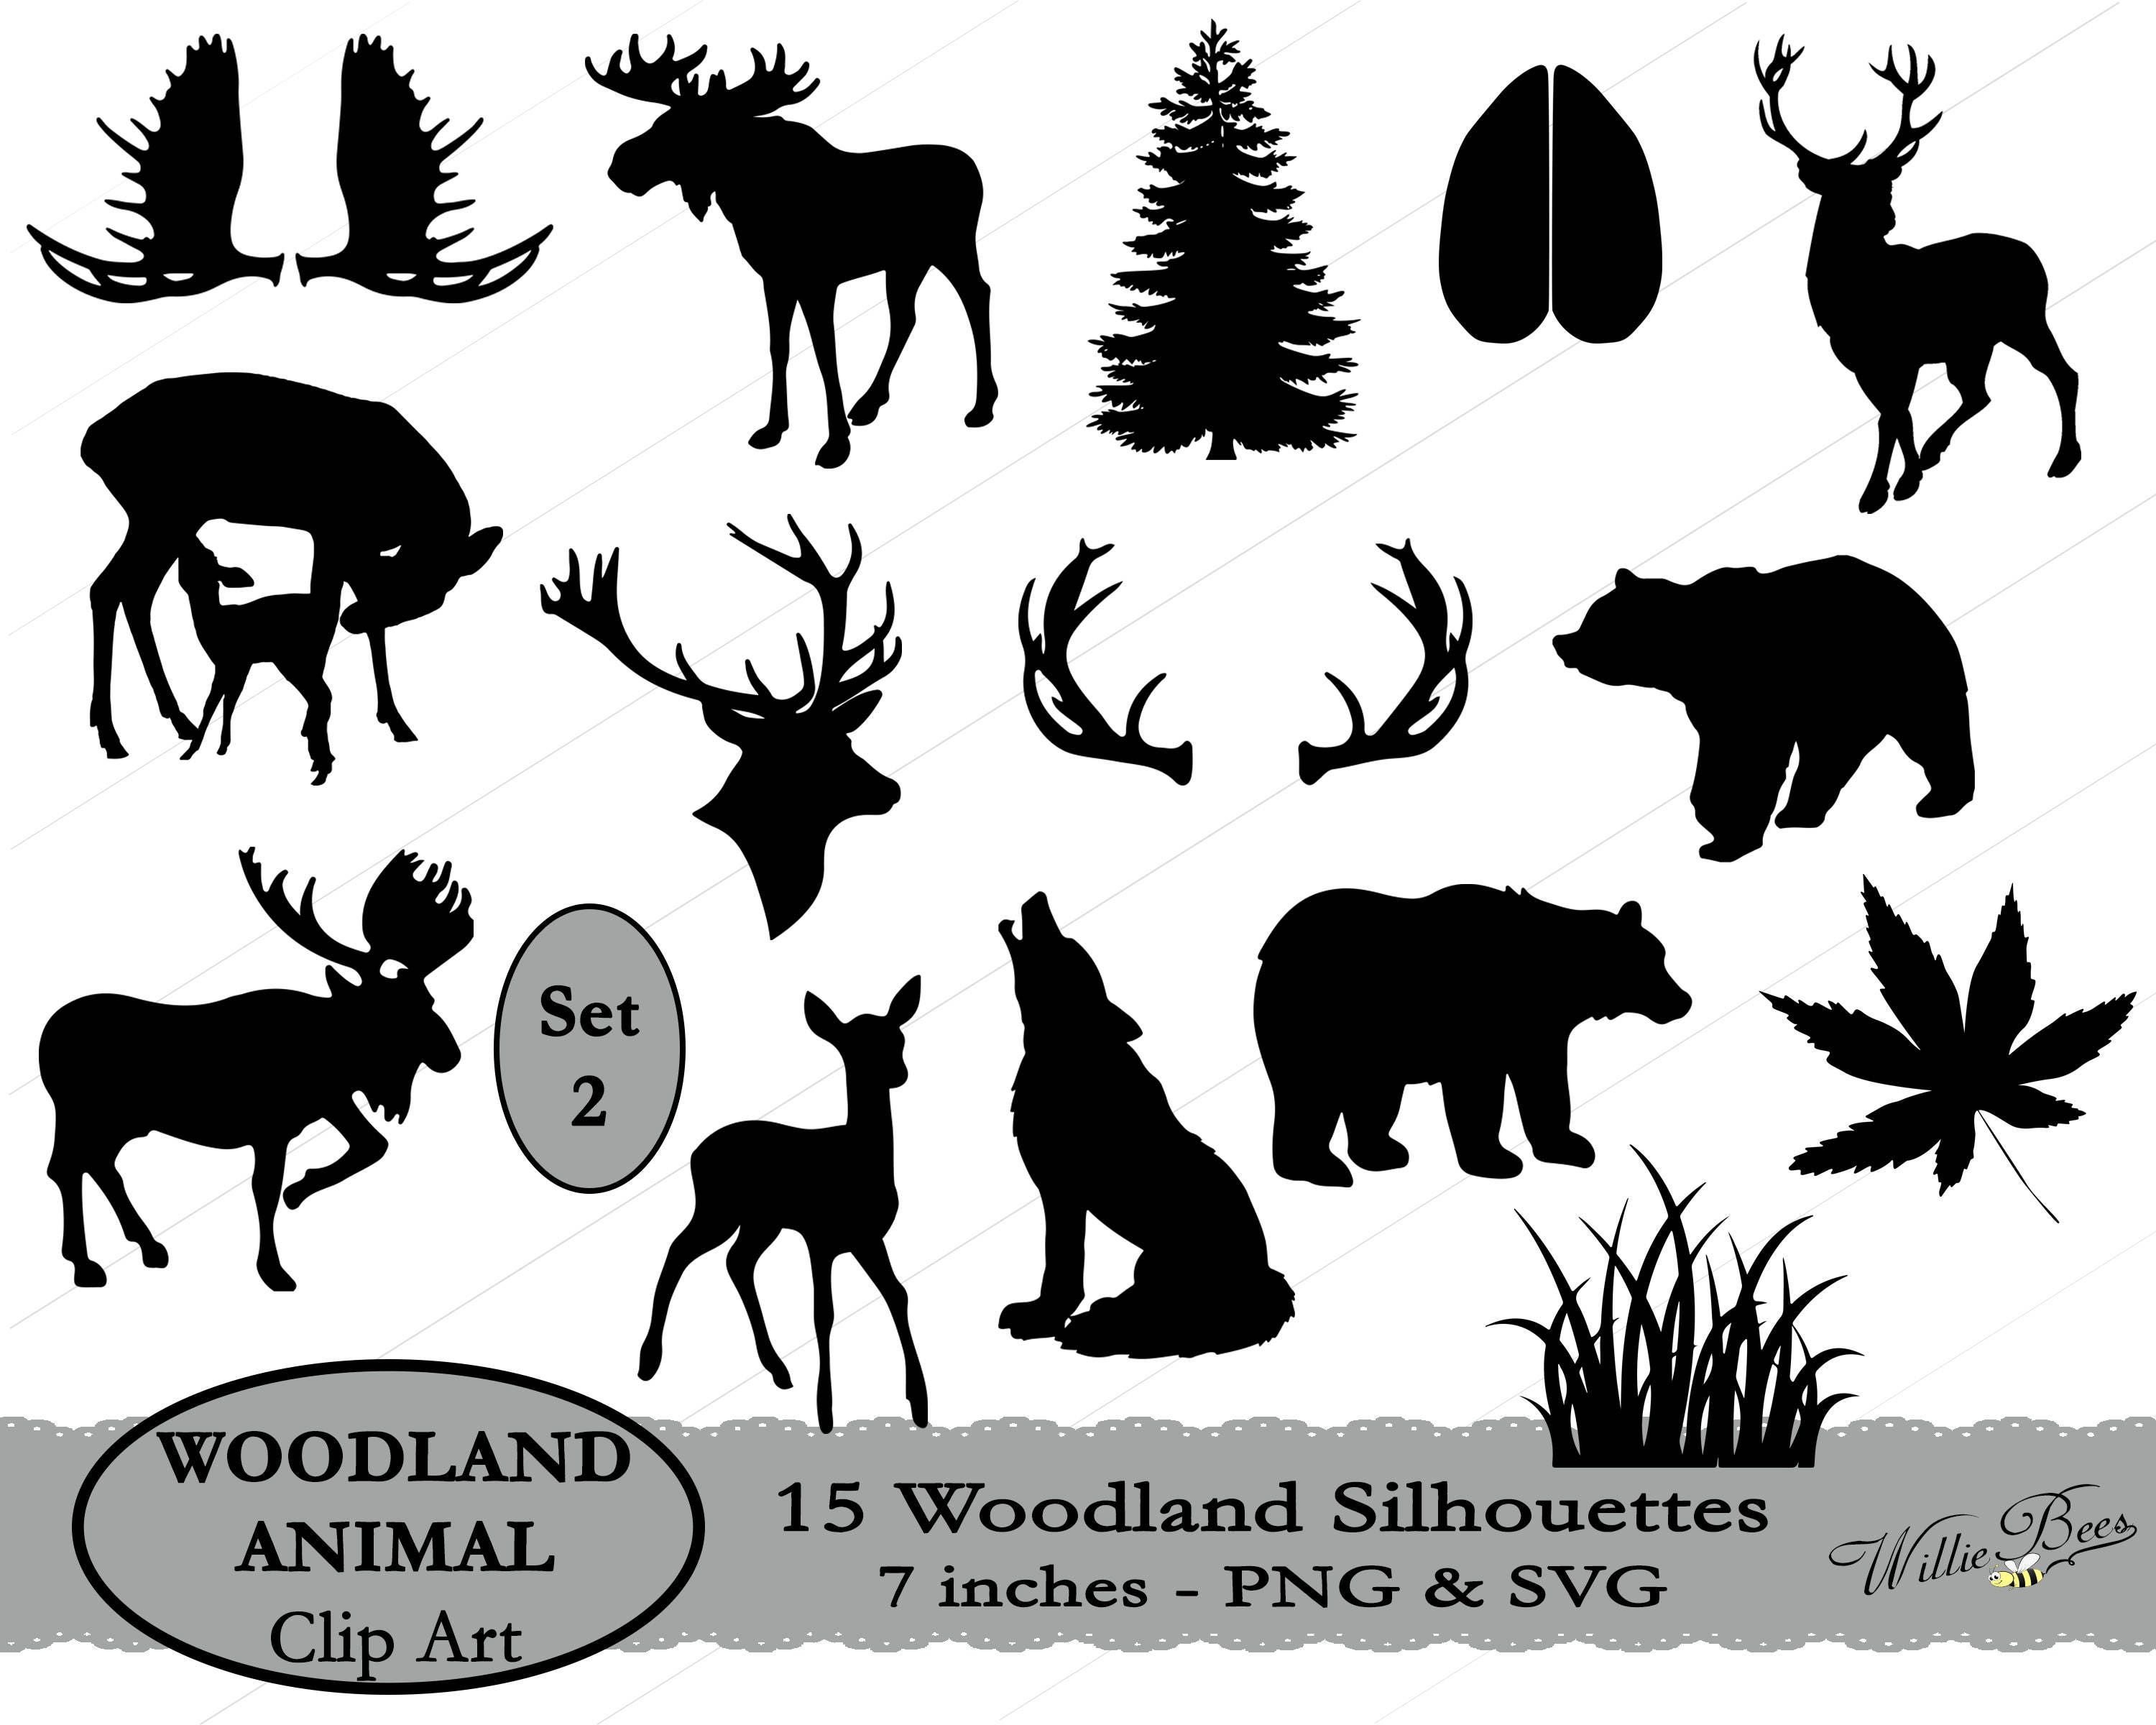 Download Woodland Animal SVG Animal Clip Art Forest Animal Whitetail